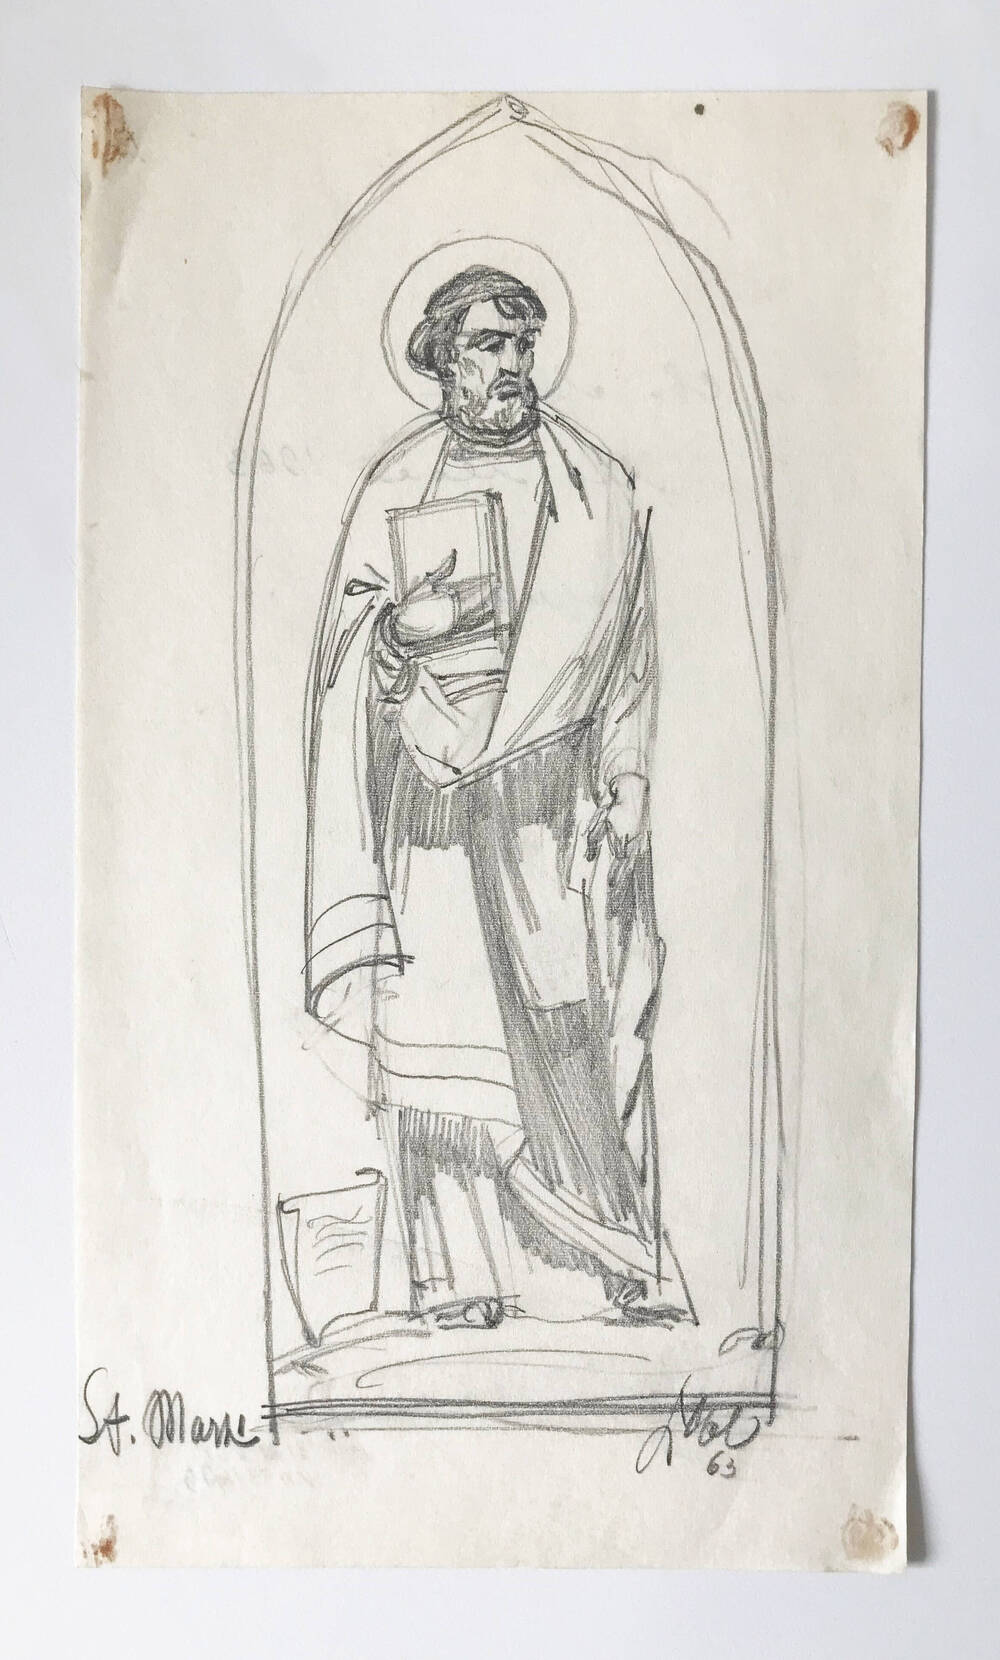 Рисунок карандашом из коллекции скульптора Леонида Молодоженина.